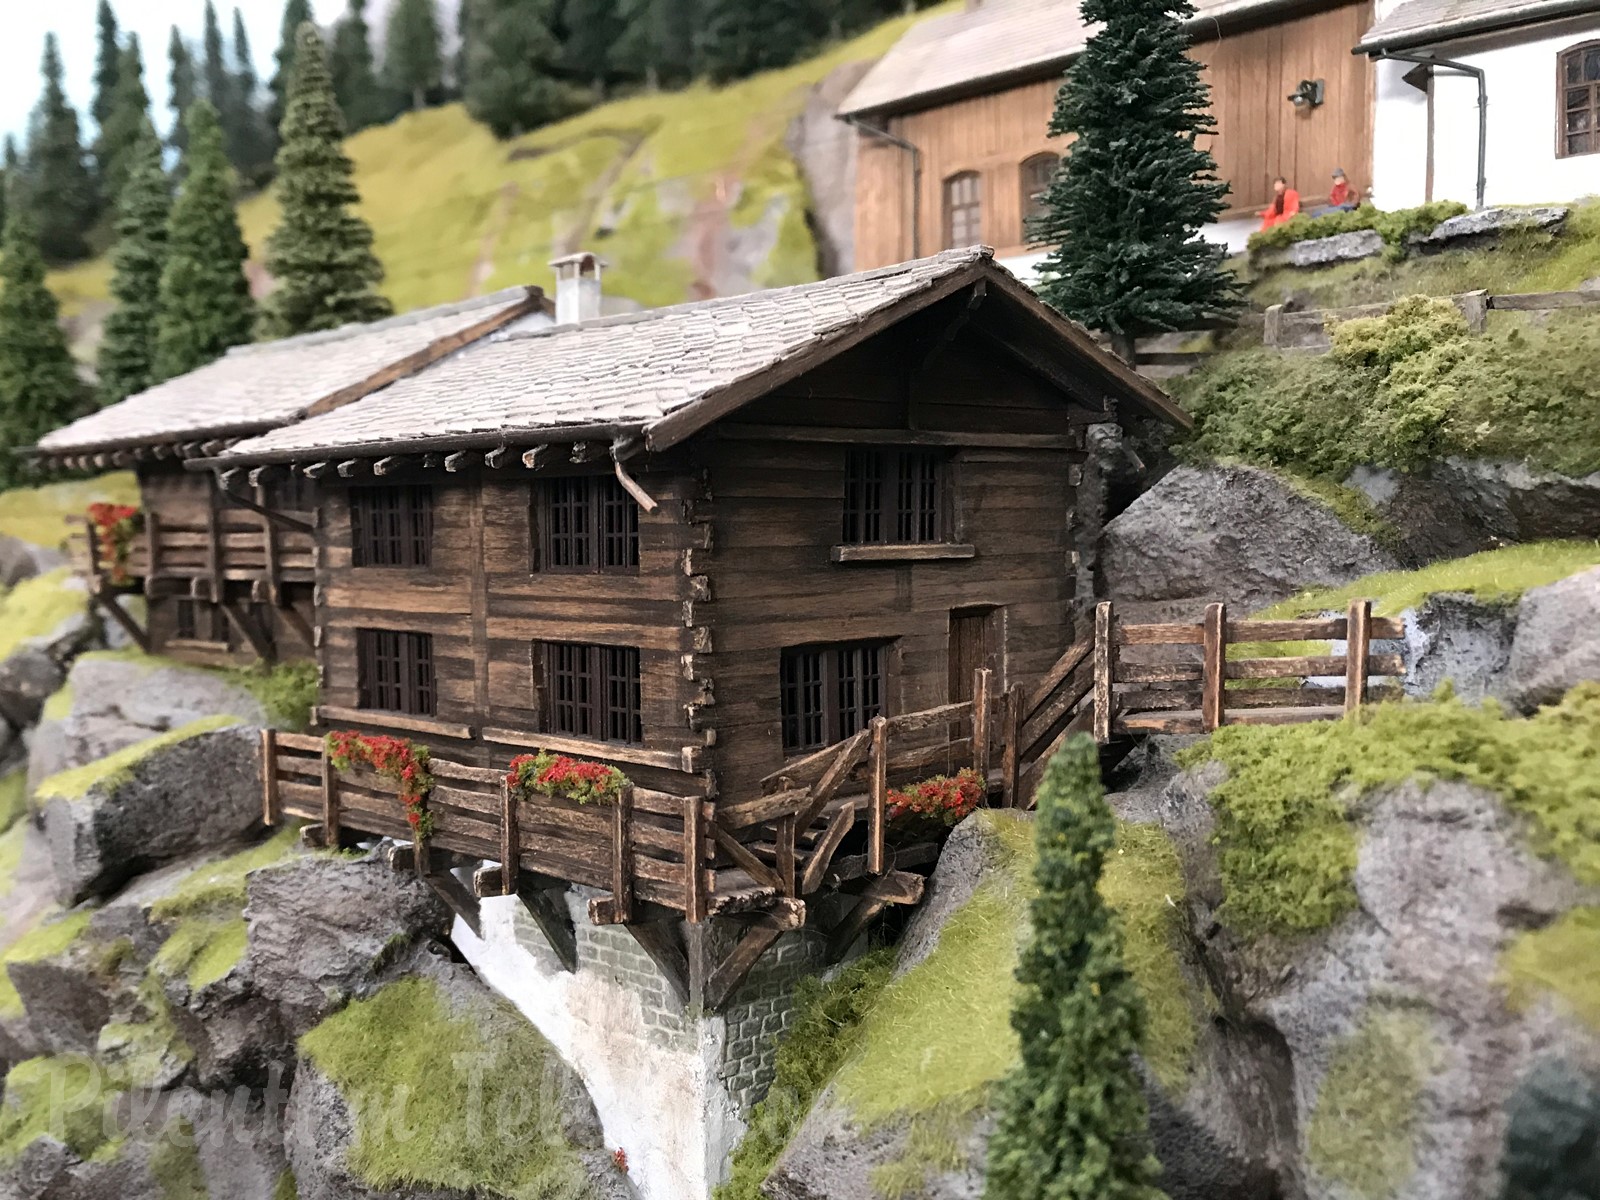 HO scale model trains in Switzerland: Brian Rodham’s beautiful Swiss model railway layout